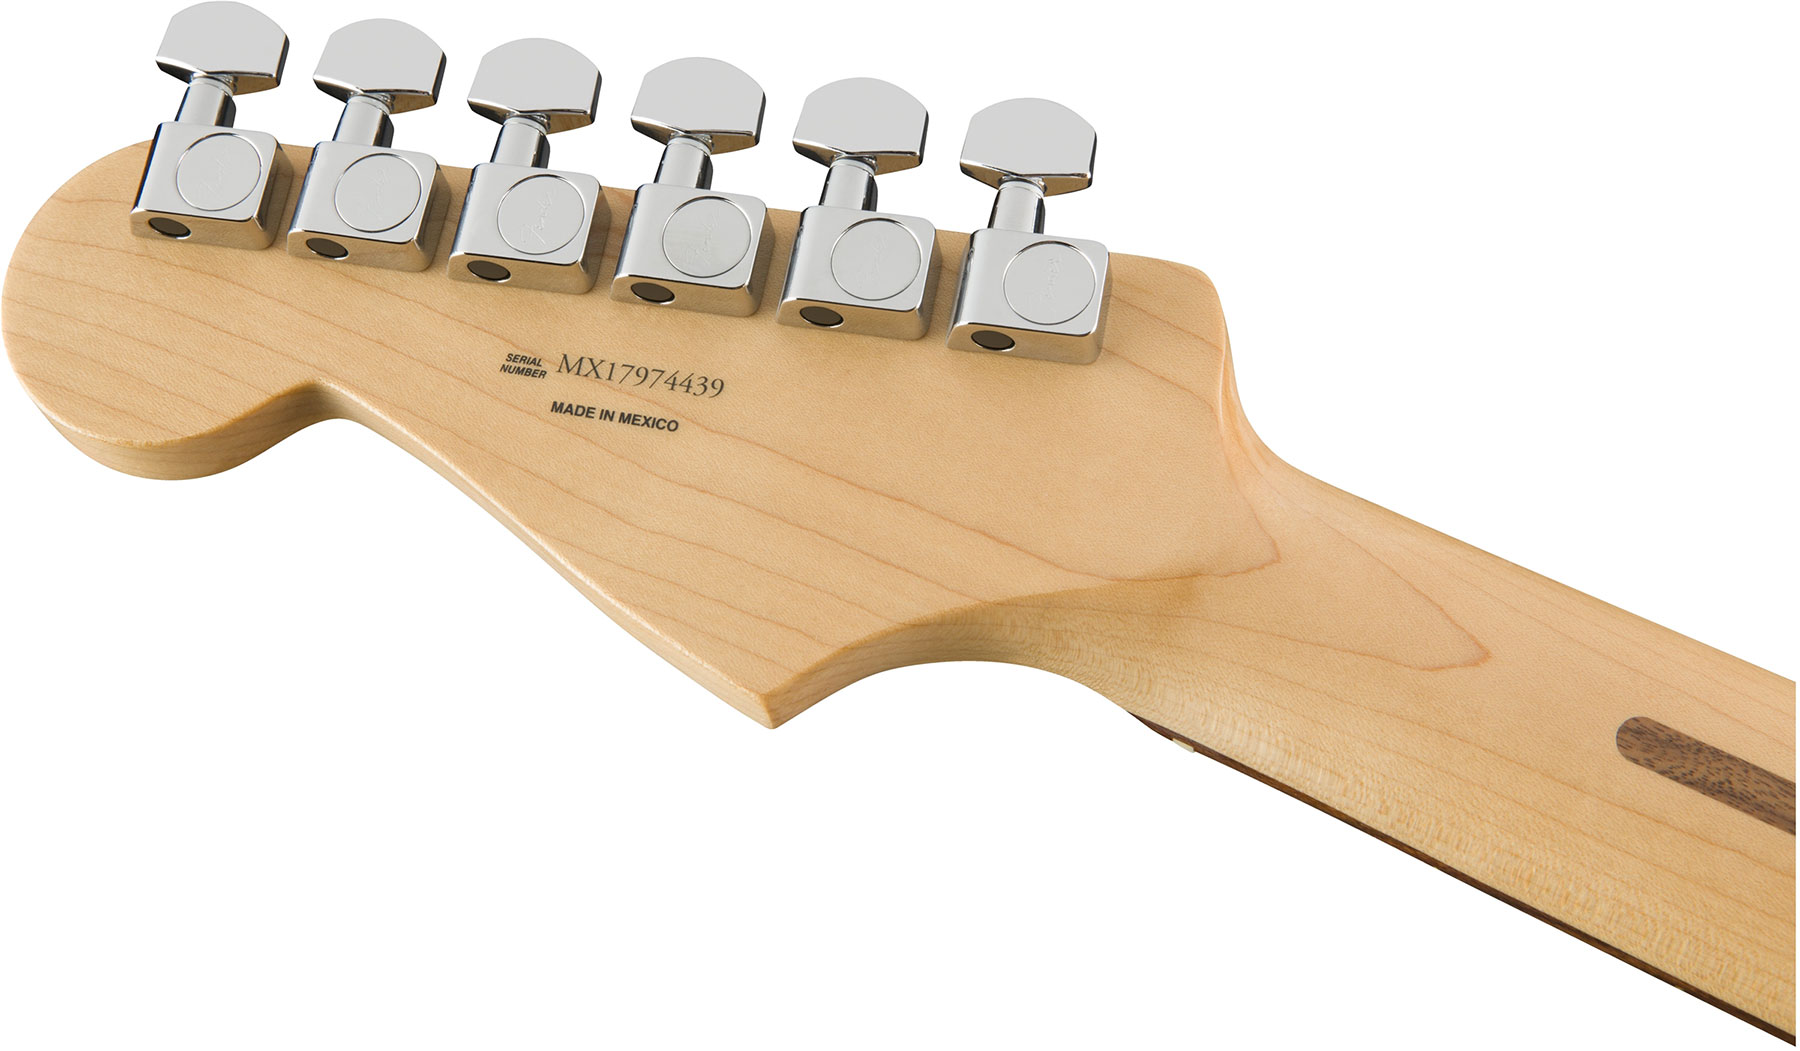 Fender Strat Player Mex Sss Pf - Sonic Red - Str shape electric guitar - Variation 4